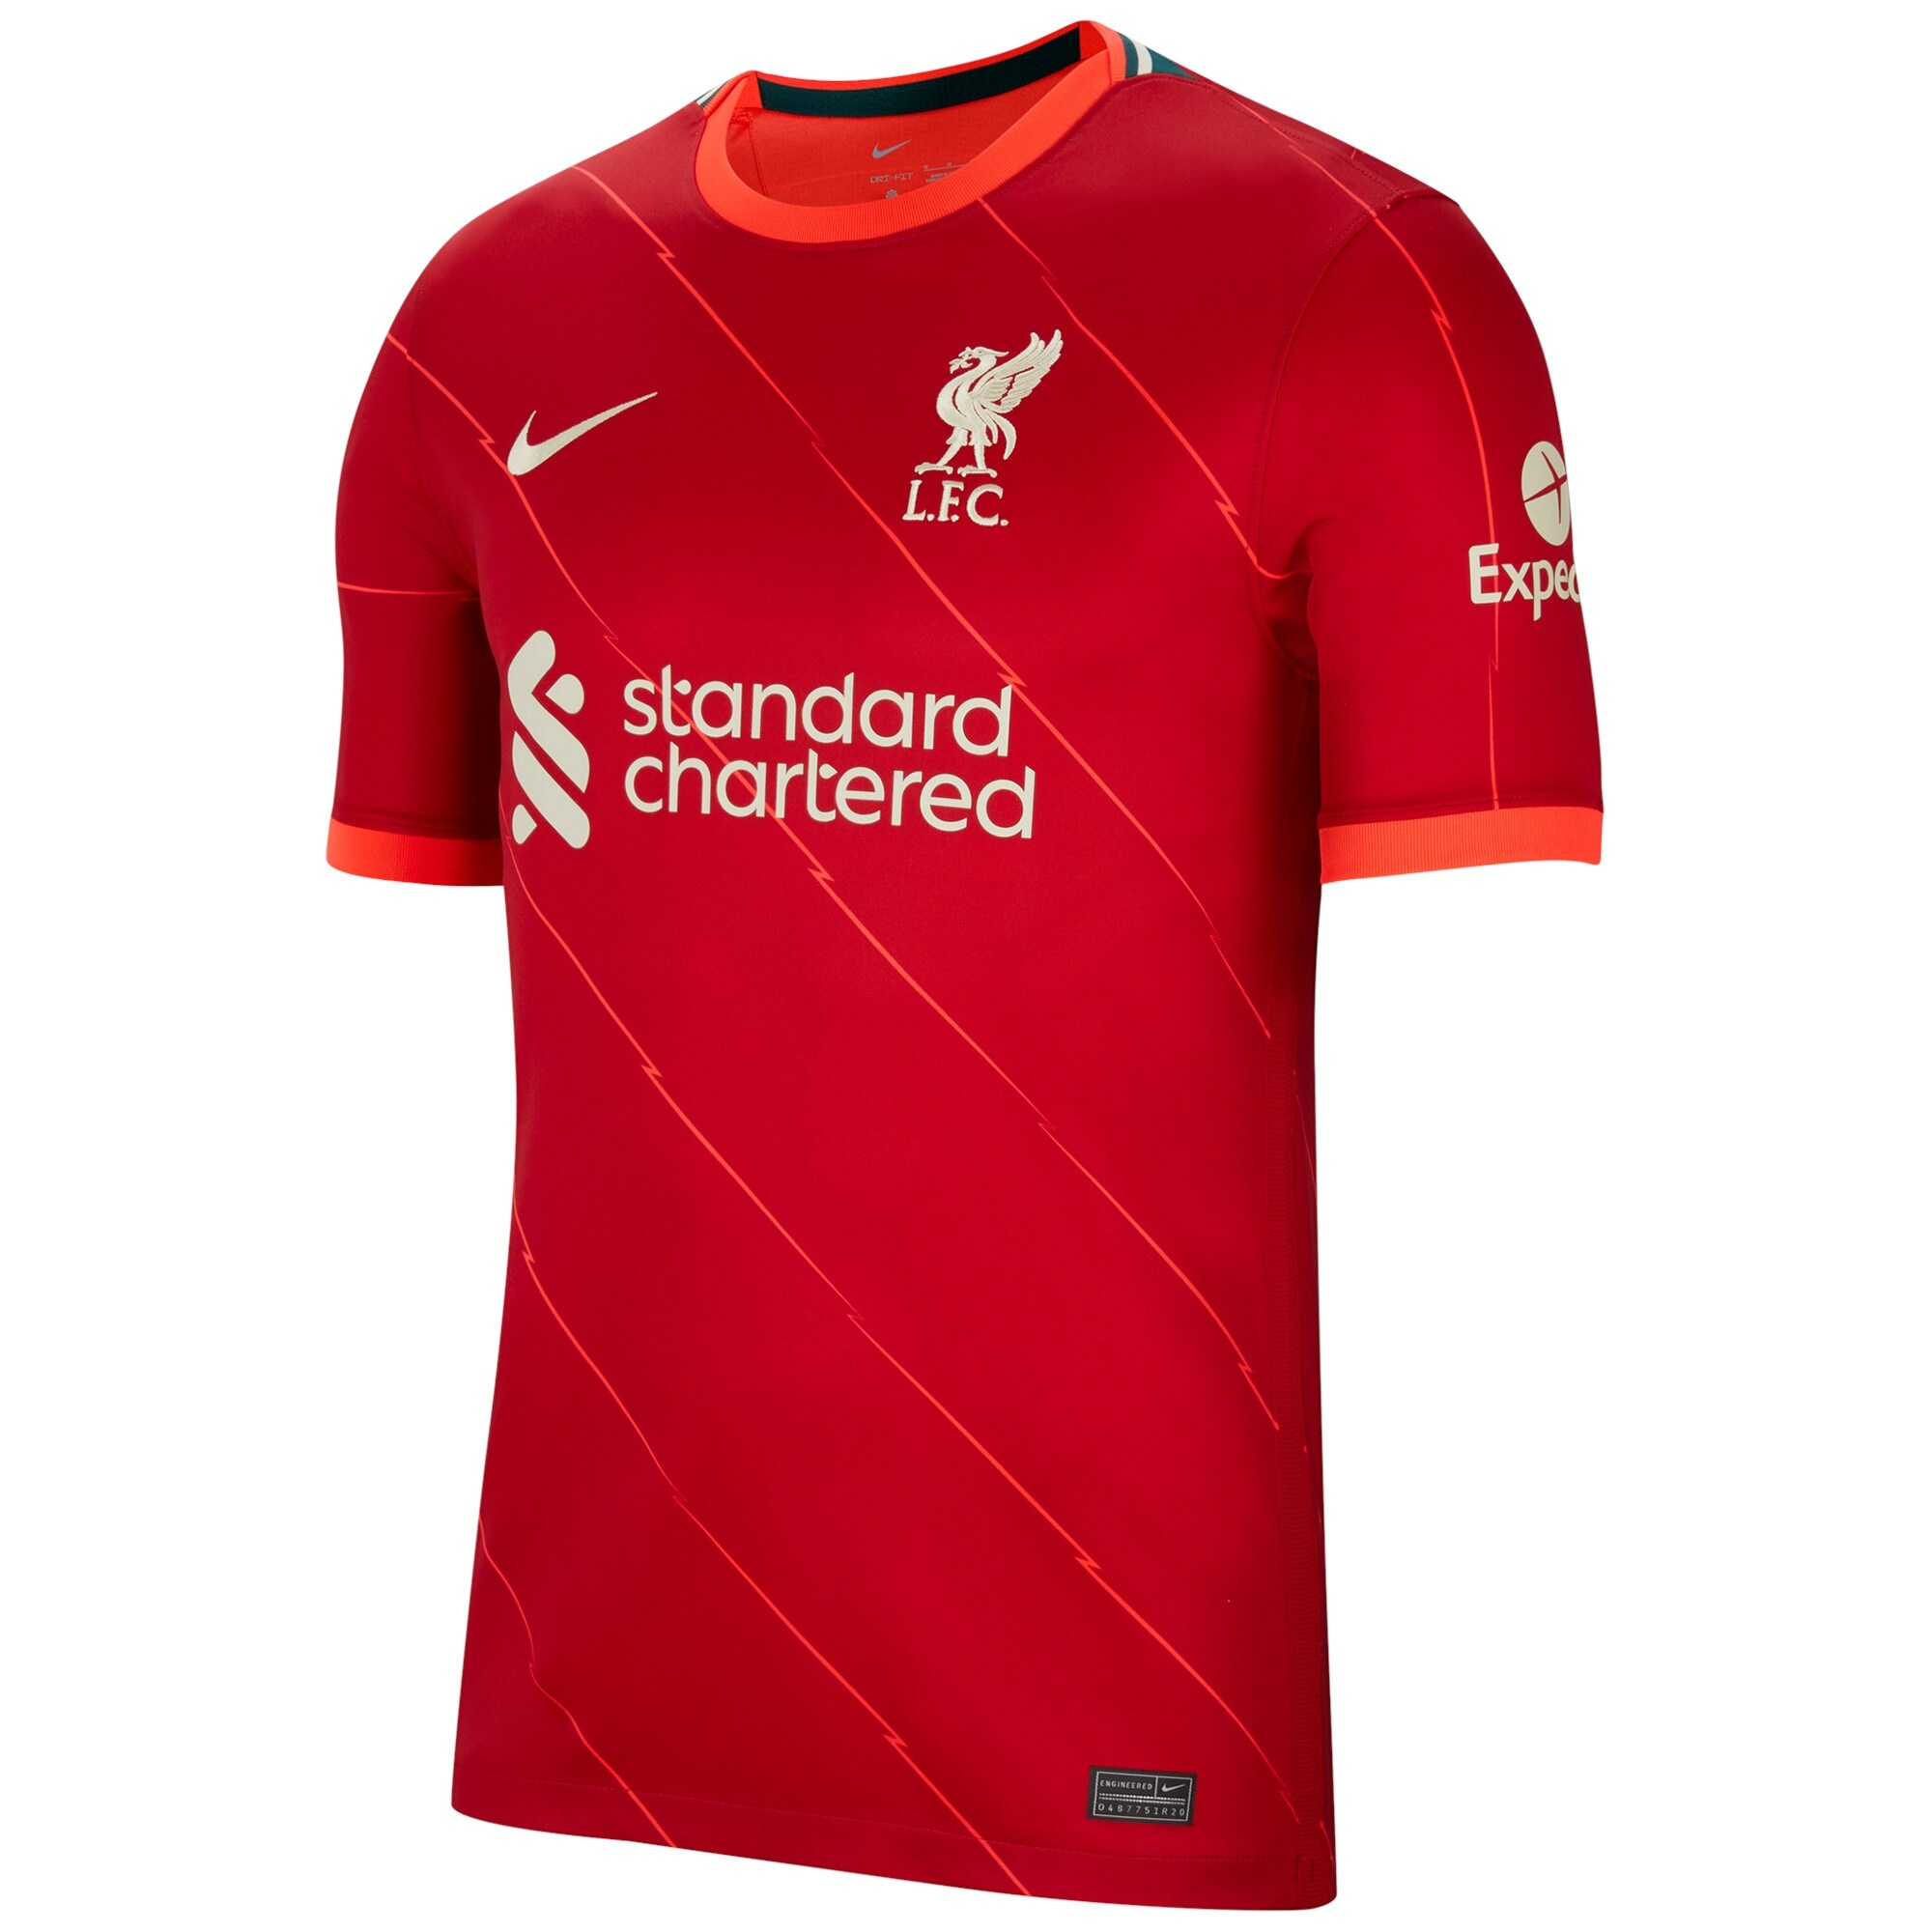 Liverpool Home Stadium Shirt 2021-22 with Diogo J. 20 printing